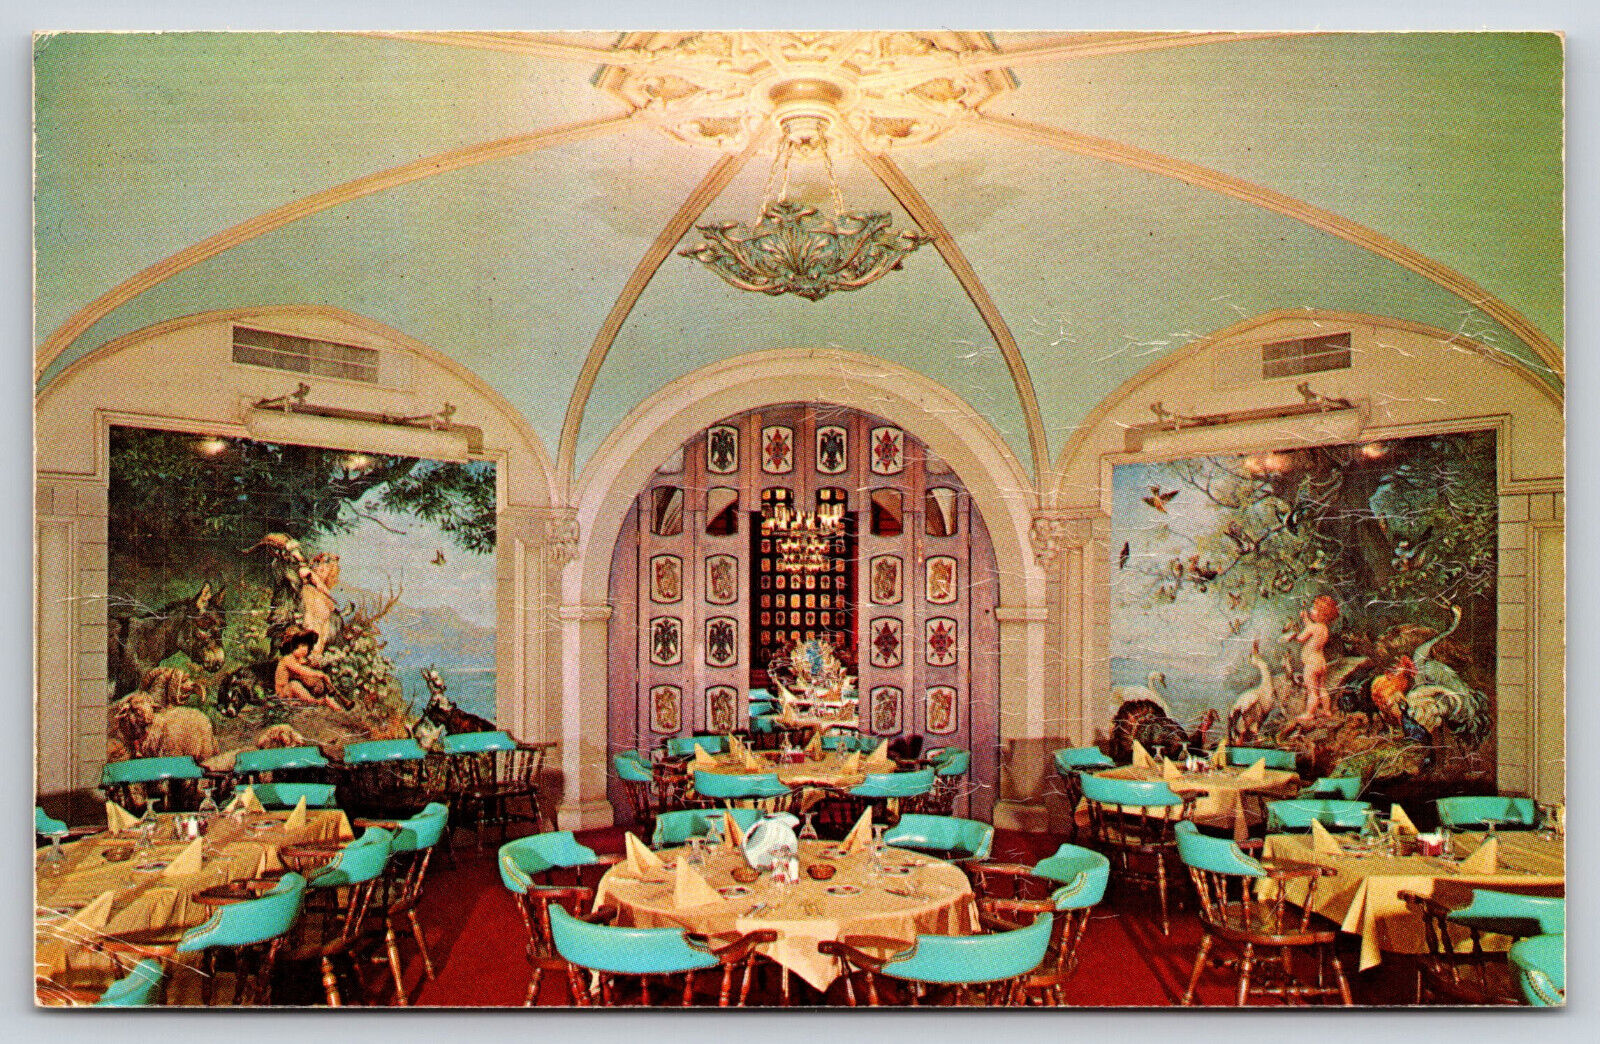 St. Louis MO-Missouri, The Bevo Mill Restaurant Interior, Art, Vintage Postcard